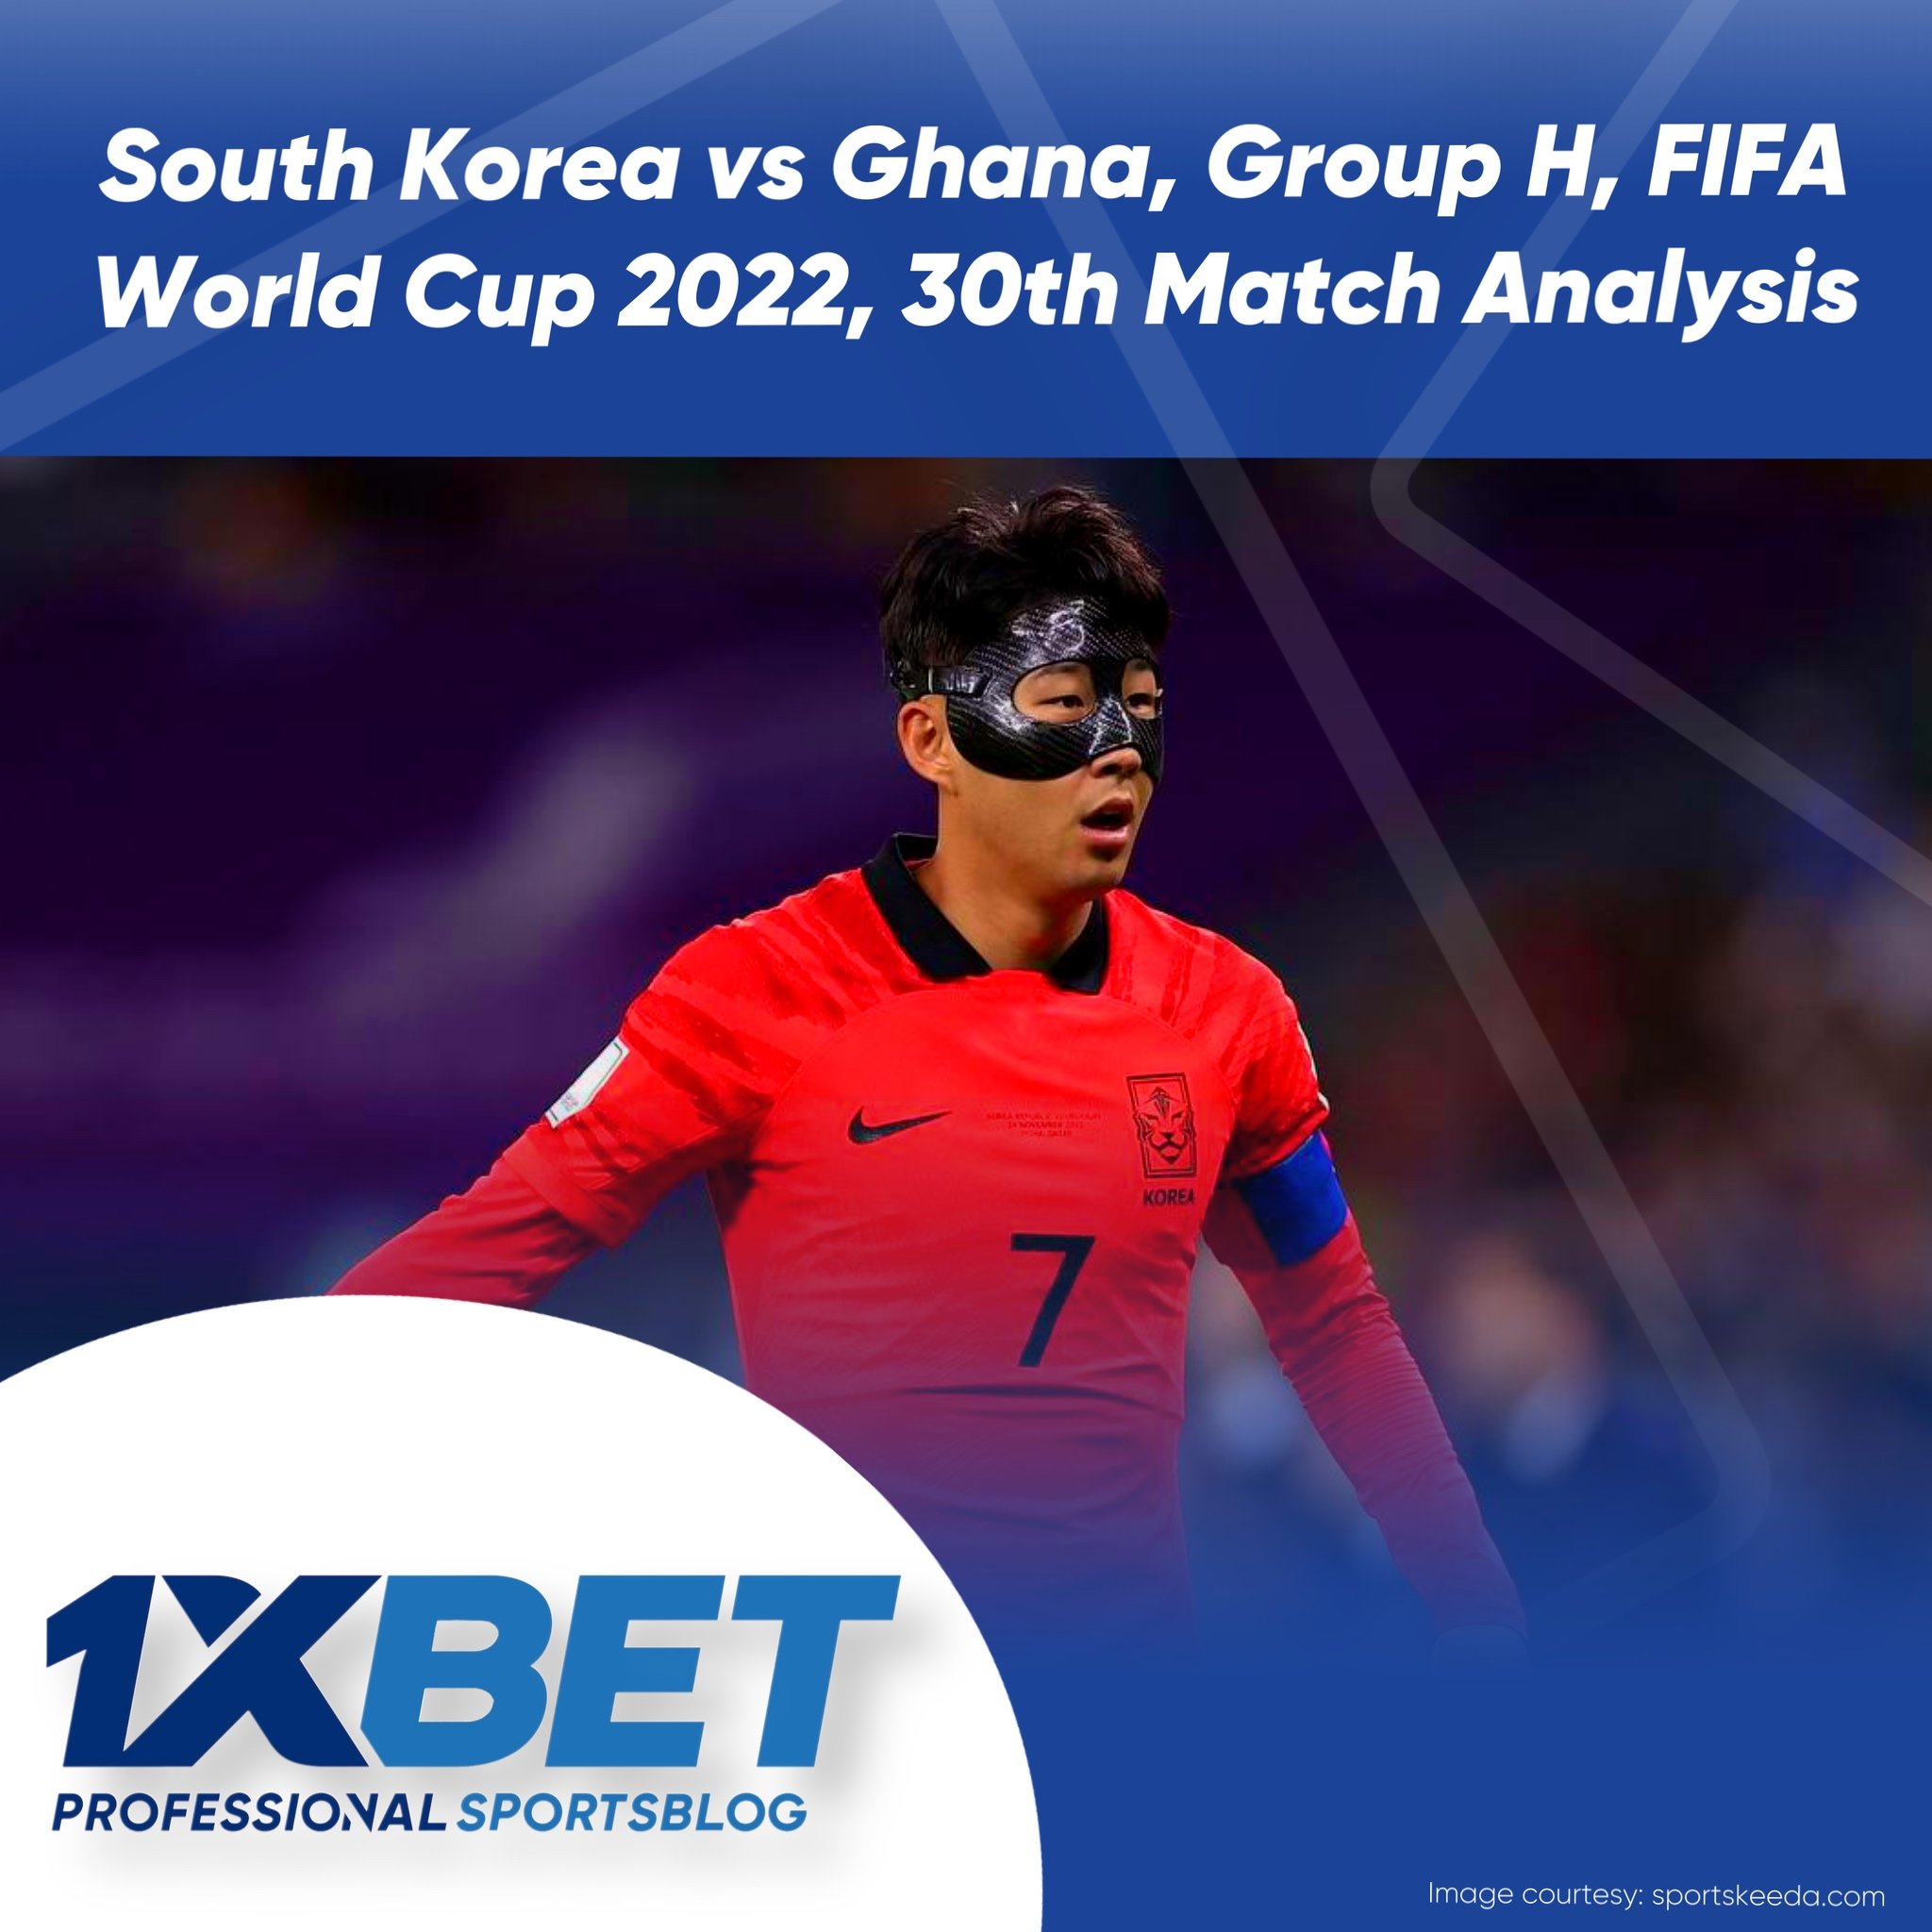 South Korea vs Ghana, Group H, FIFA World Cup 2022, 30th Match Analysis